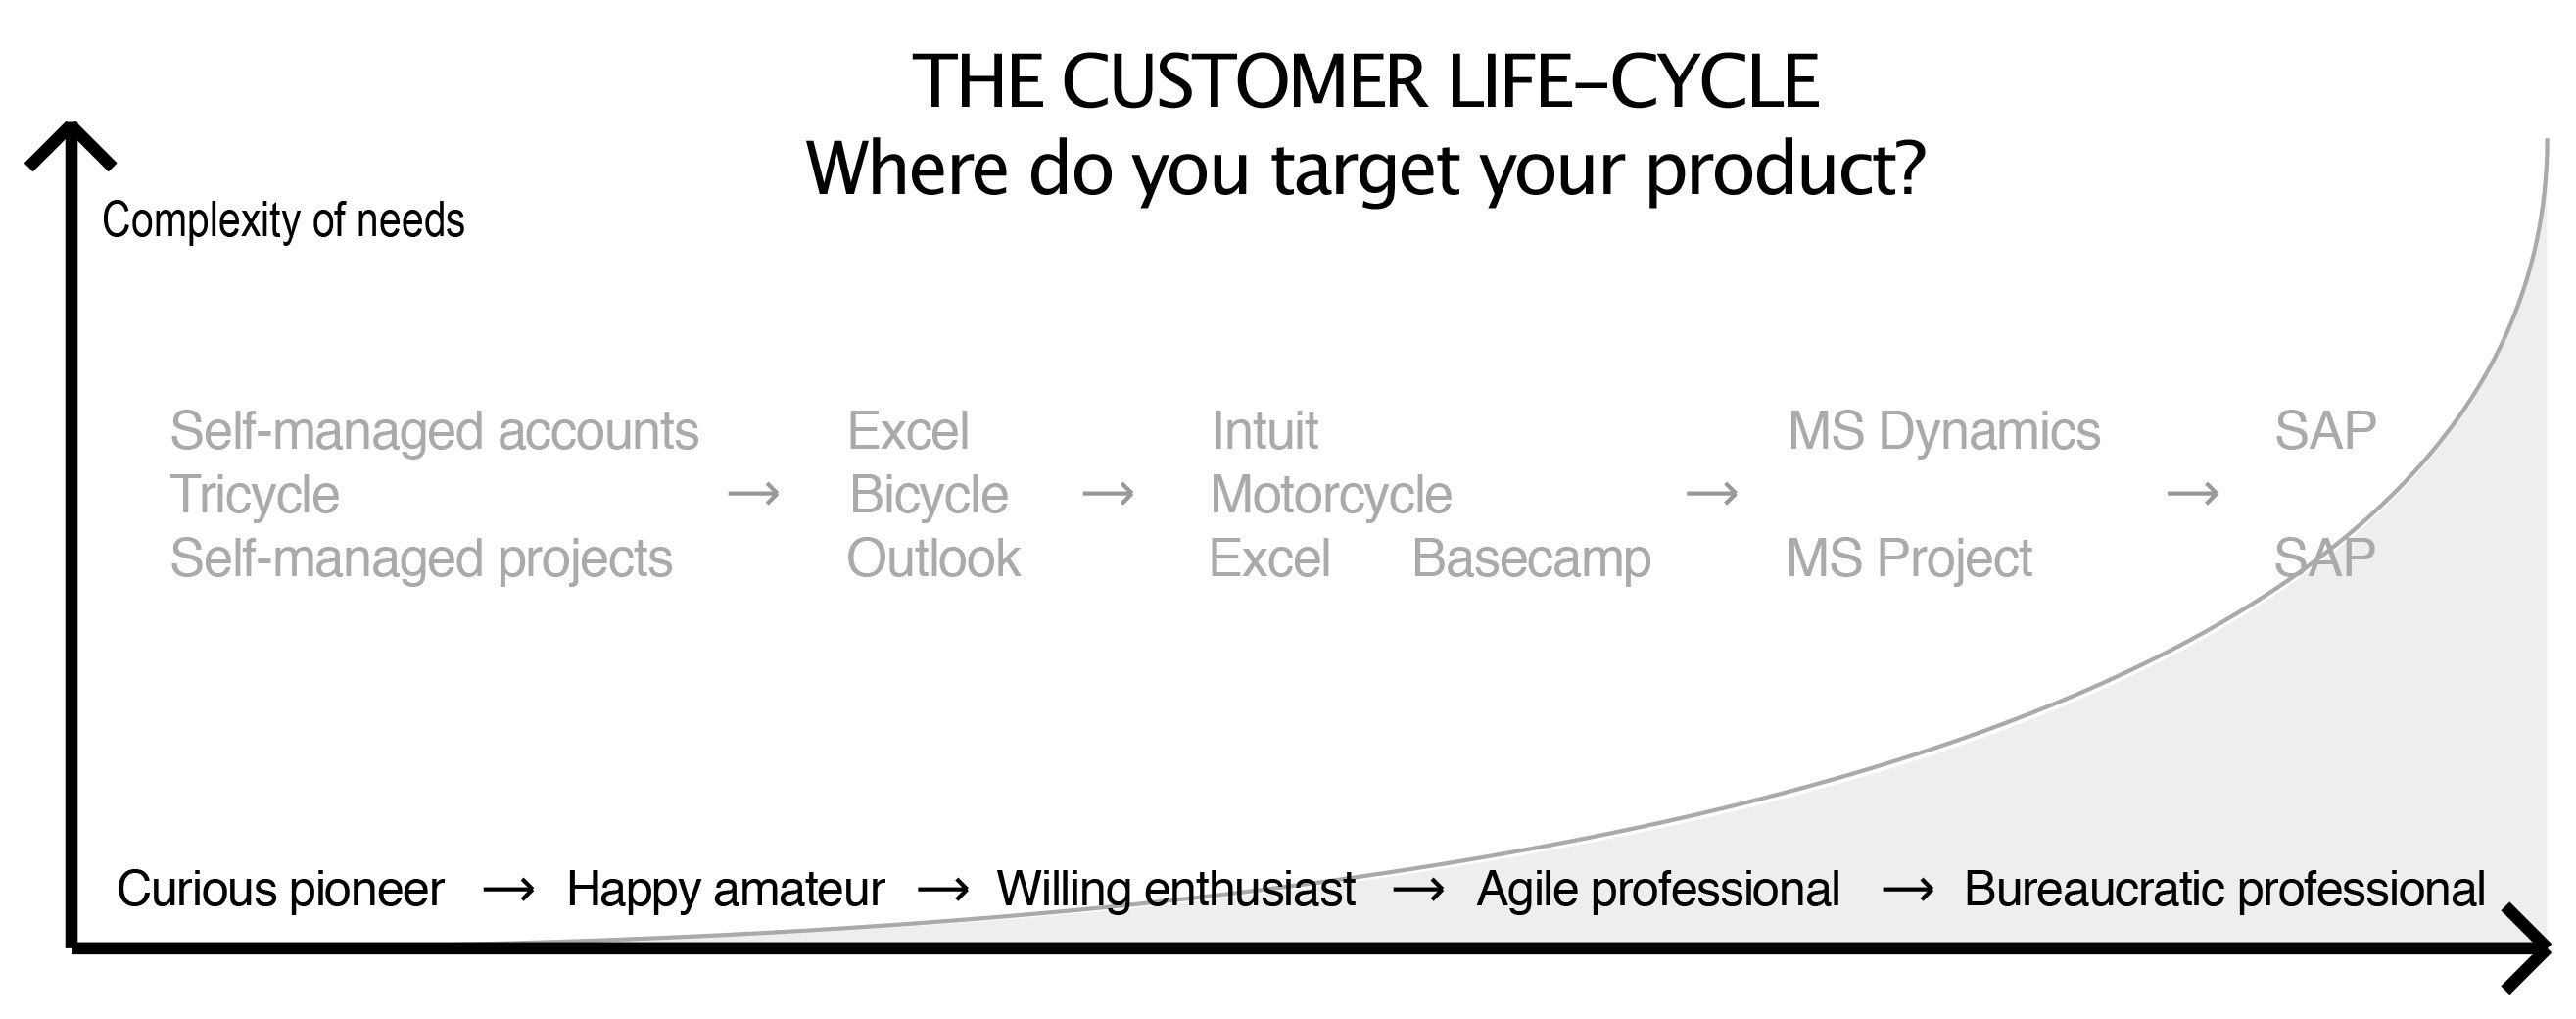 The Customer Life-Cycle